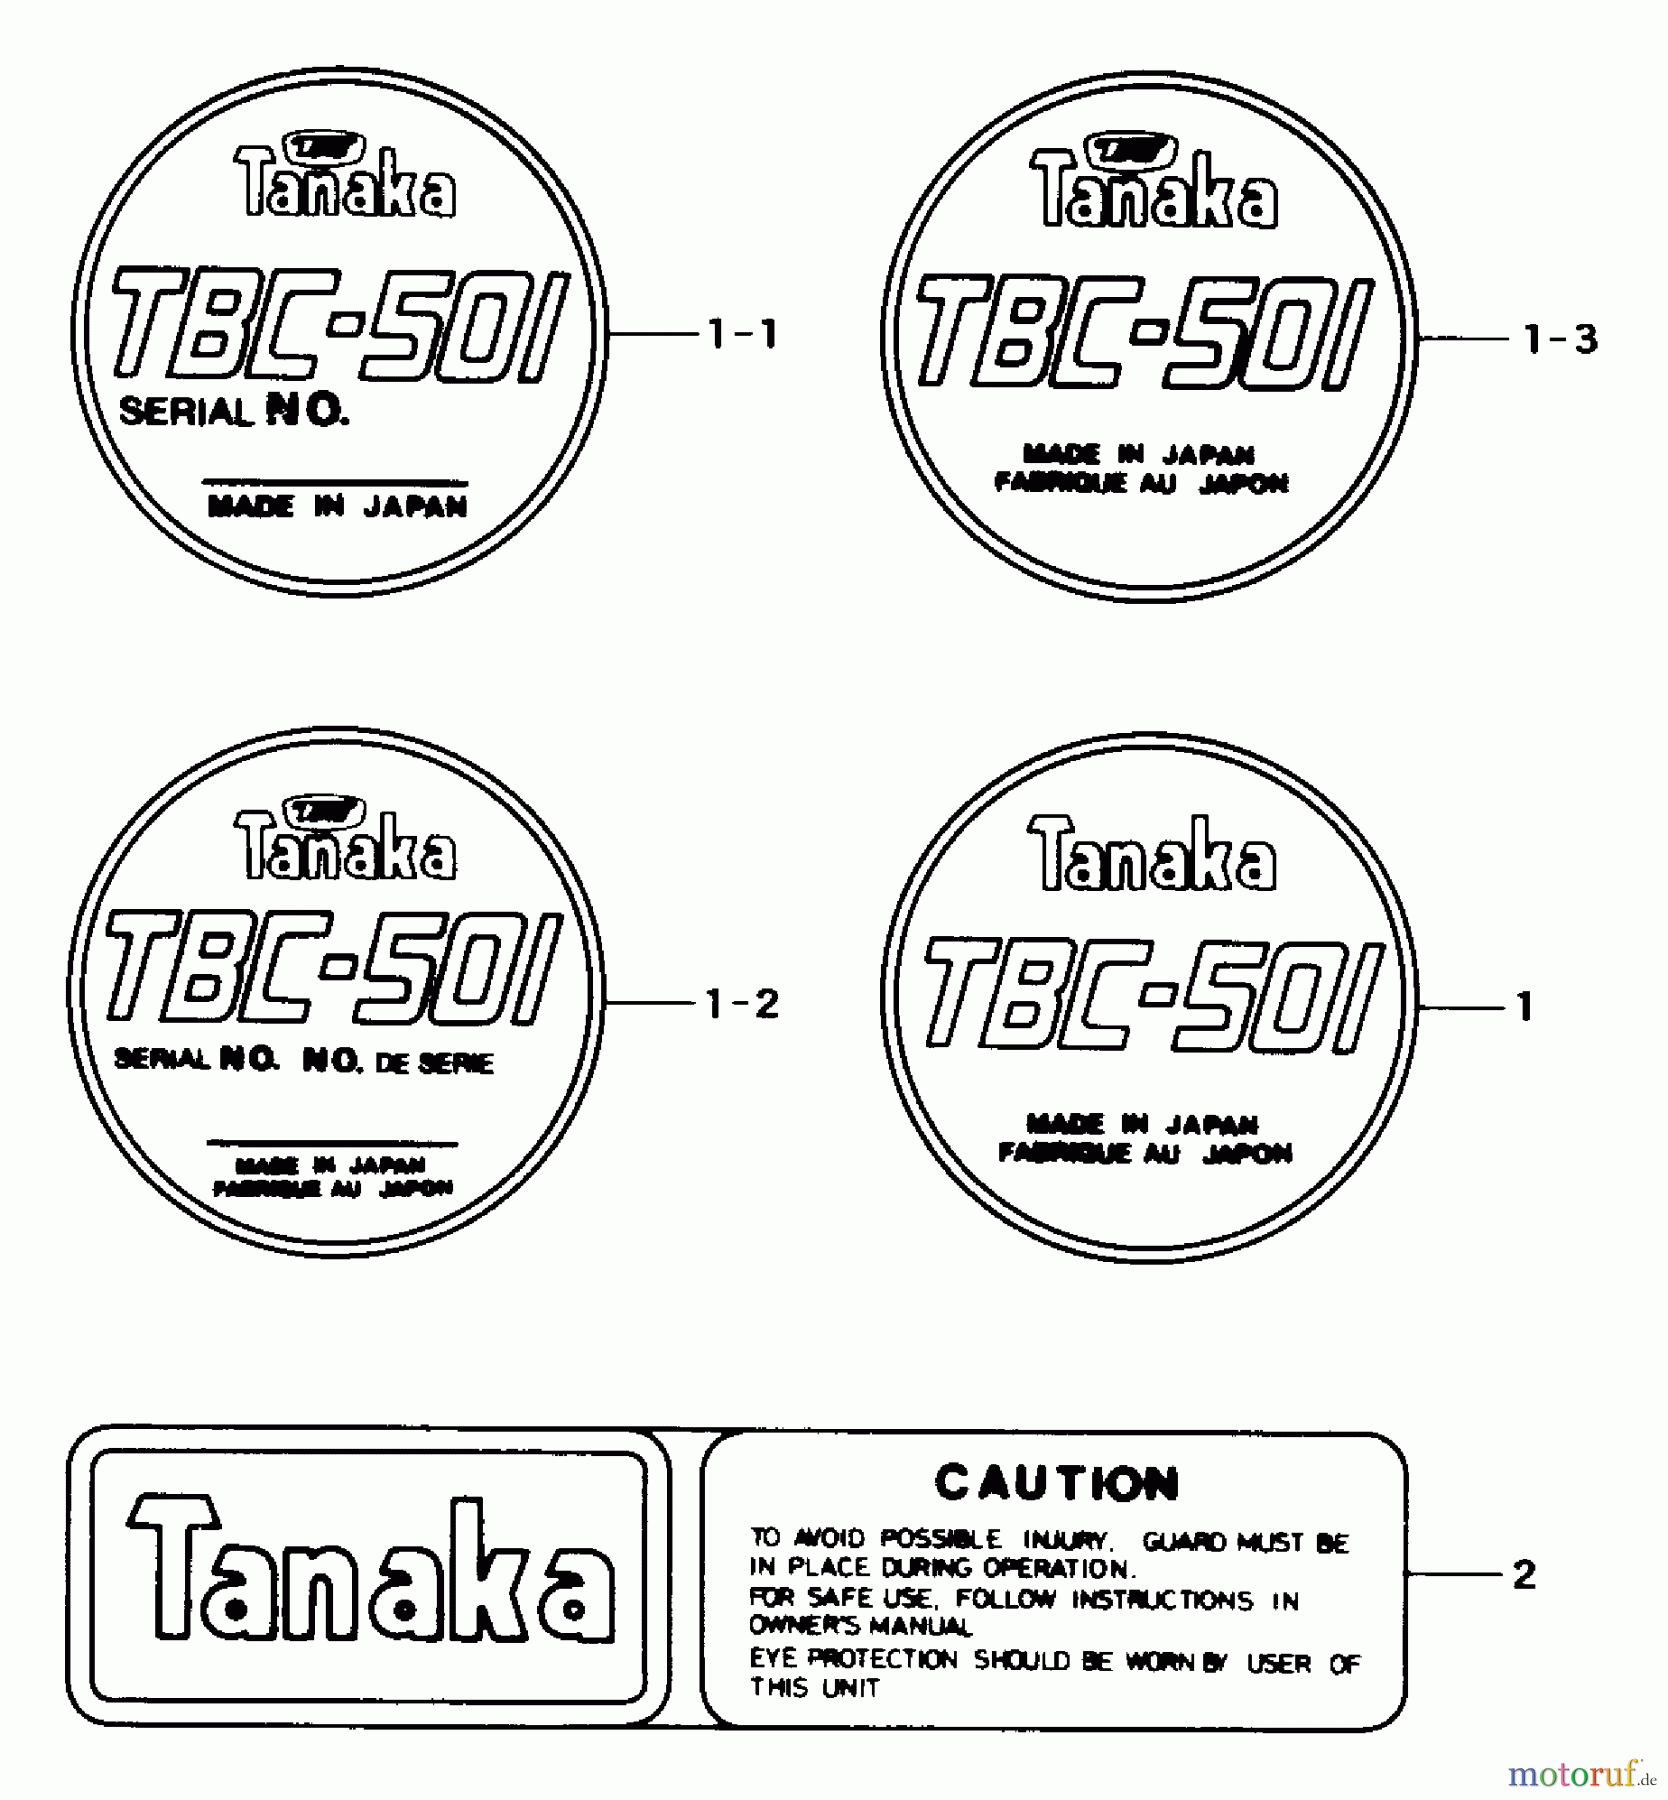  Tanaka Trimmer, Motorsensen TBC-501 - Tanaka Trimmer / Brush Cutter Marks